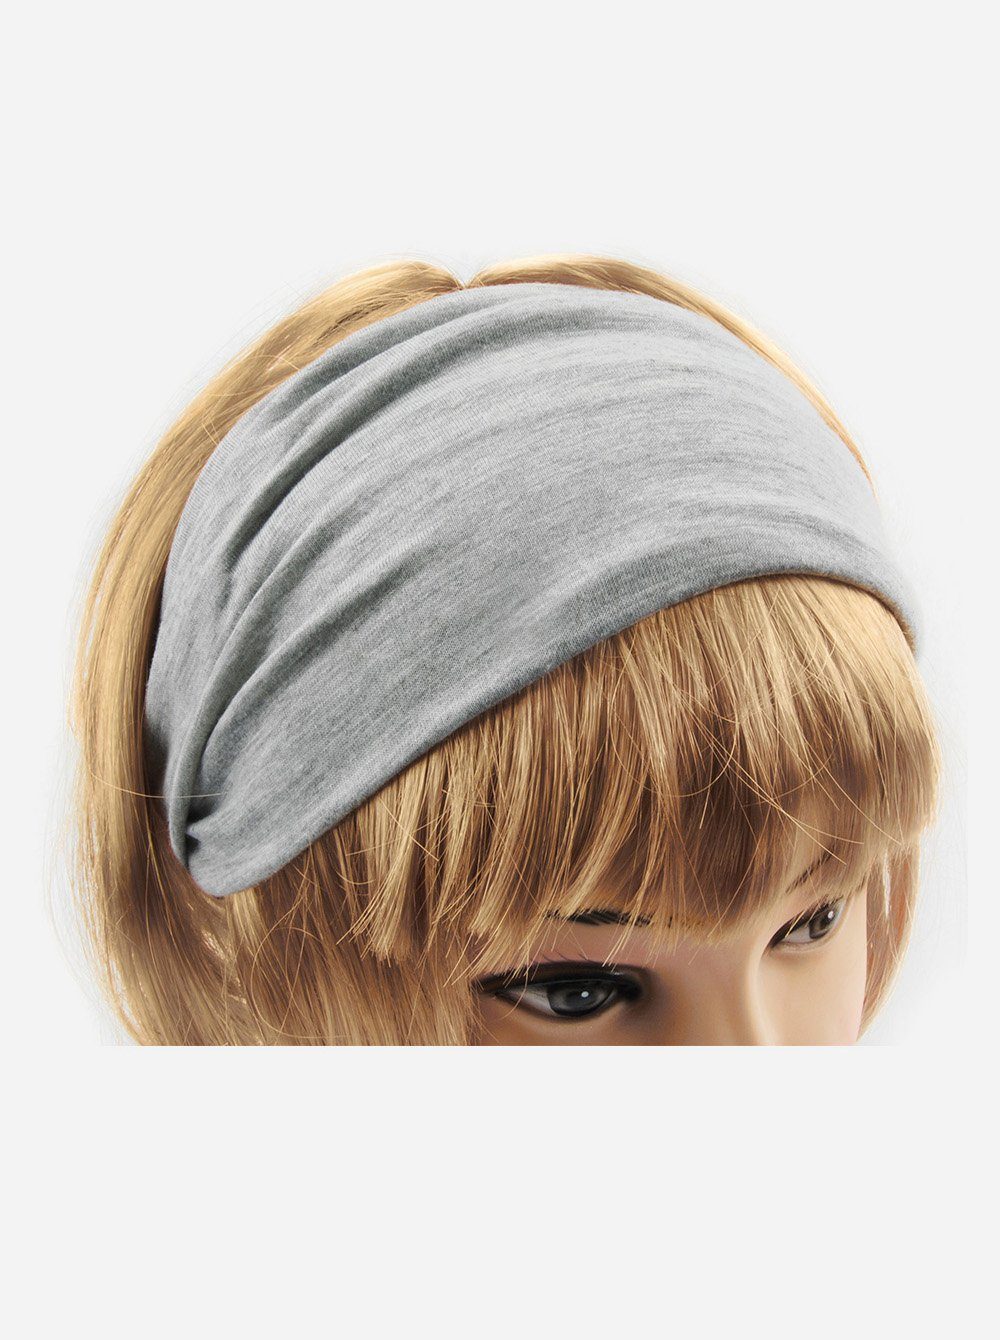 axy Haarband Damen Haarband Kopfband, Stirnband für Yoga und Sport Hairband Hellgrau